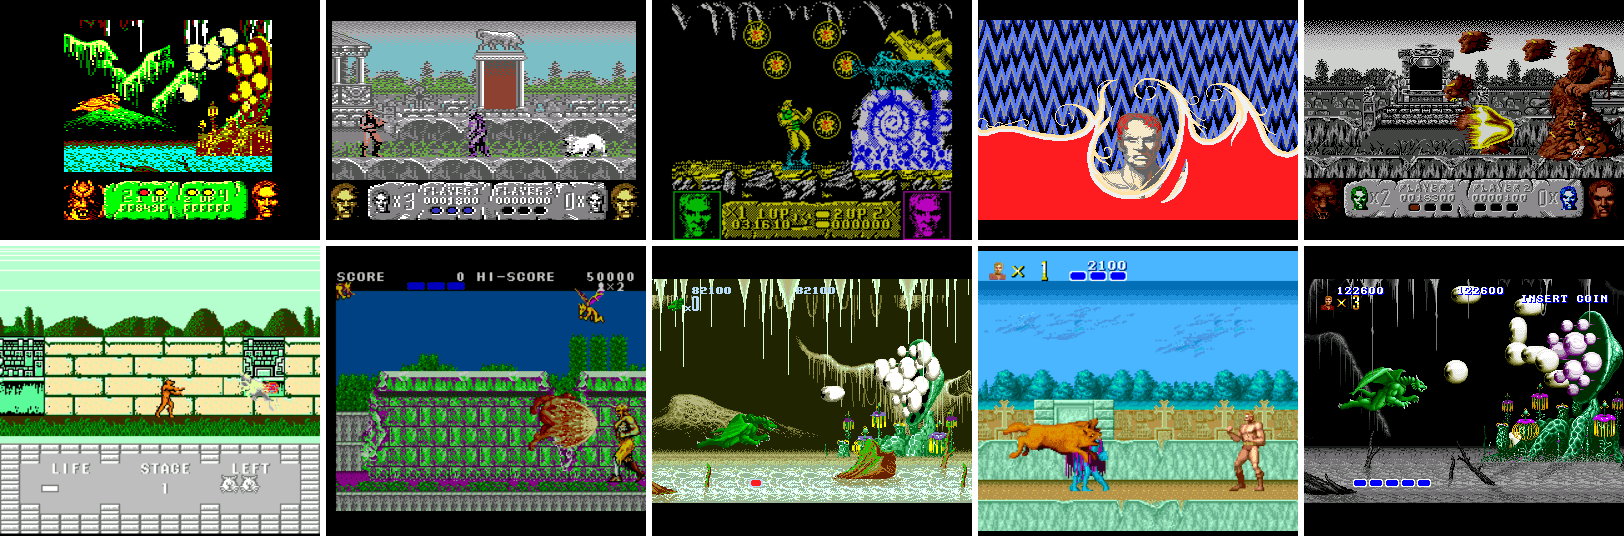 Image For Post | Amstrad - C64 - Spectrum - PC - Amiga
NES - Master System - Megadrive - PC Engine CD - Arcade